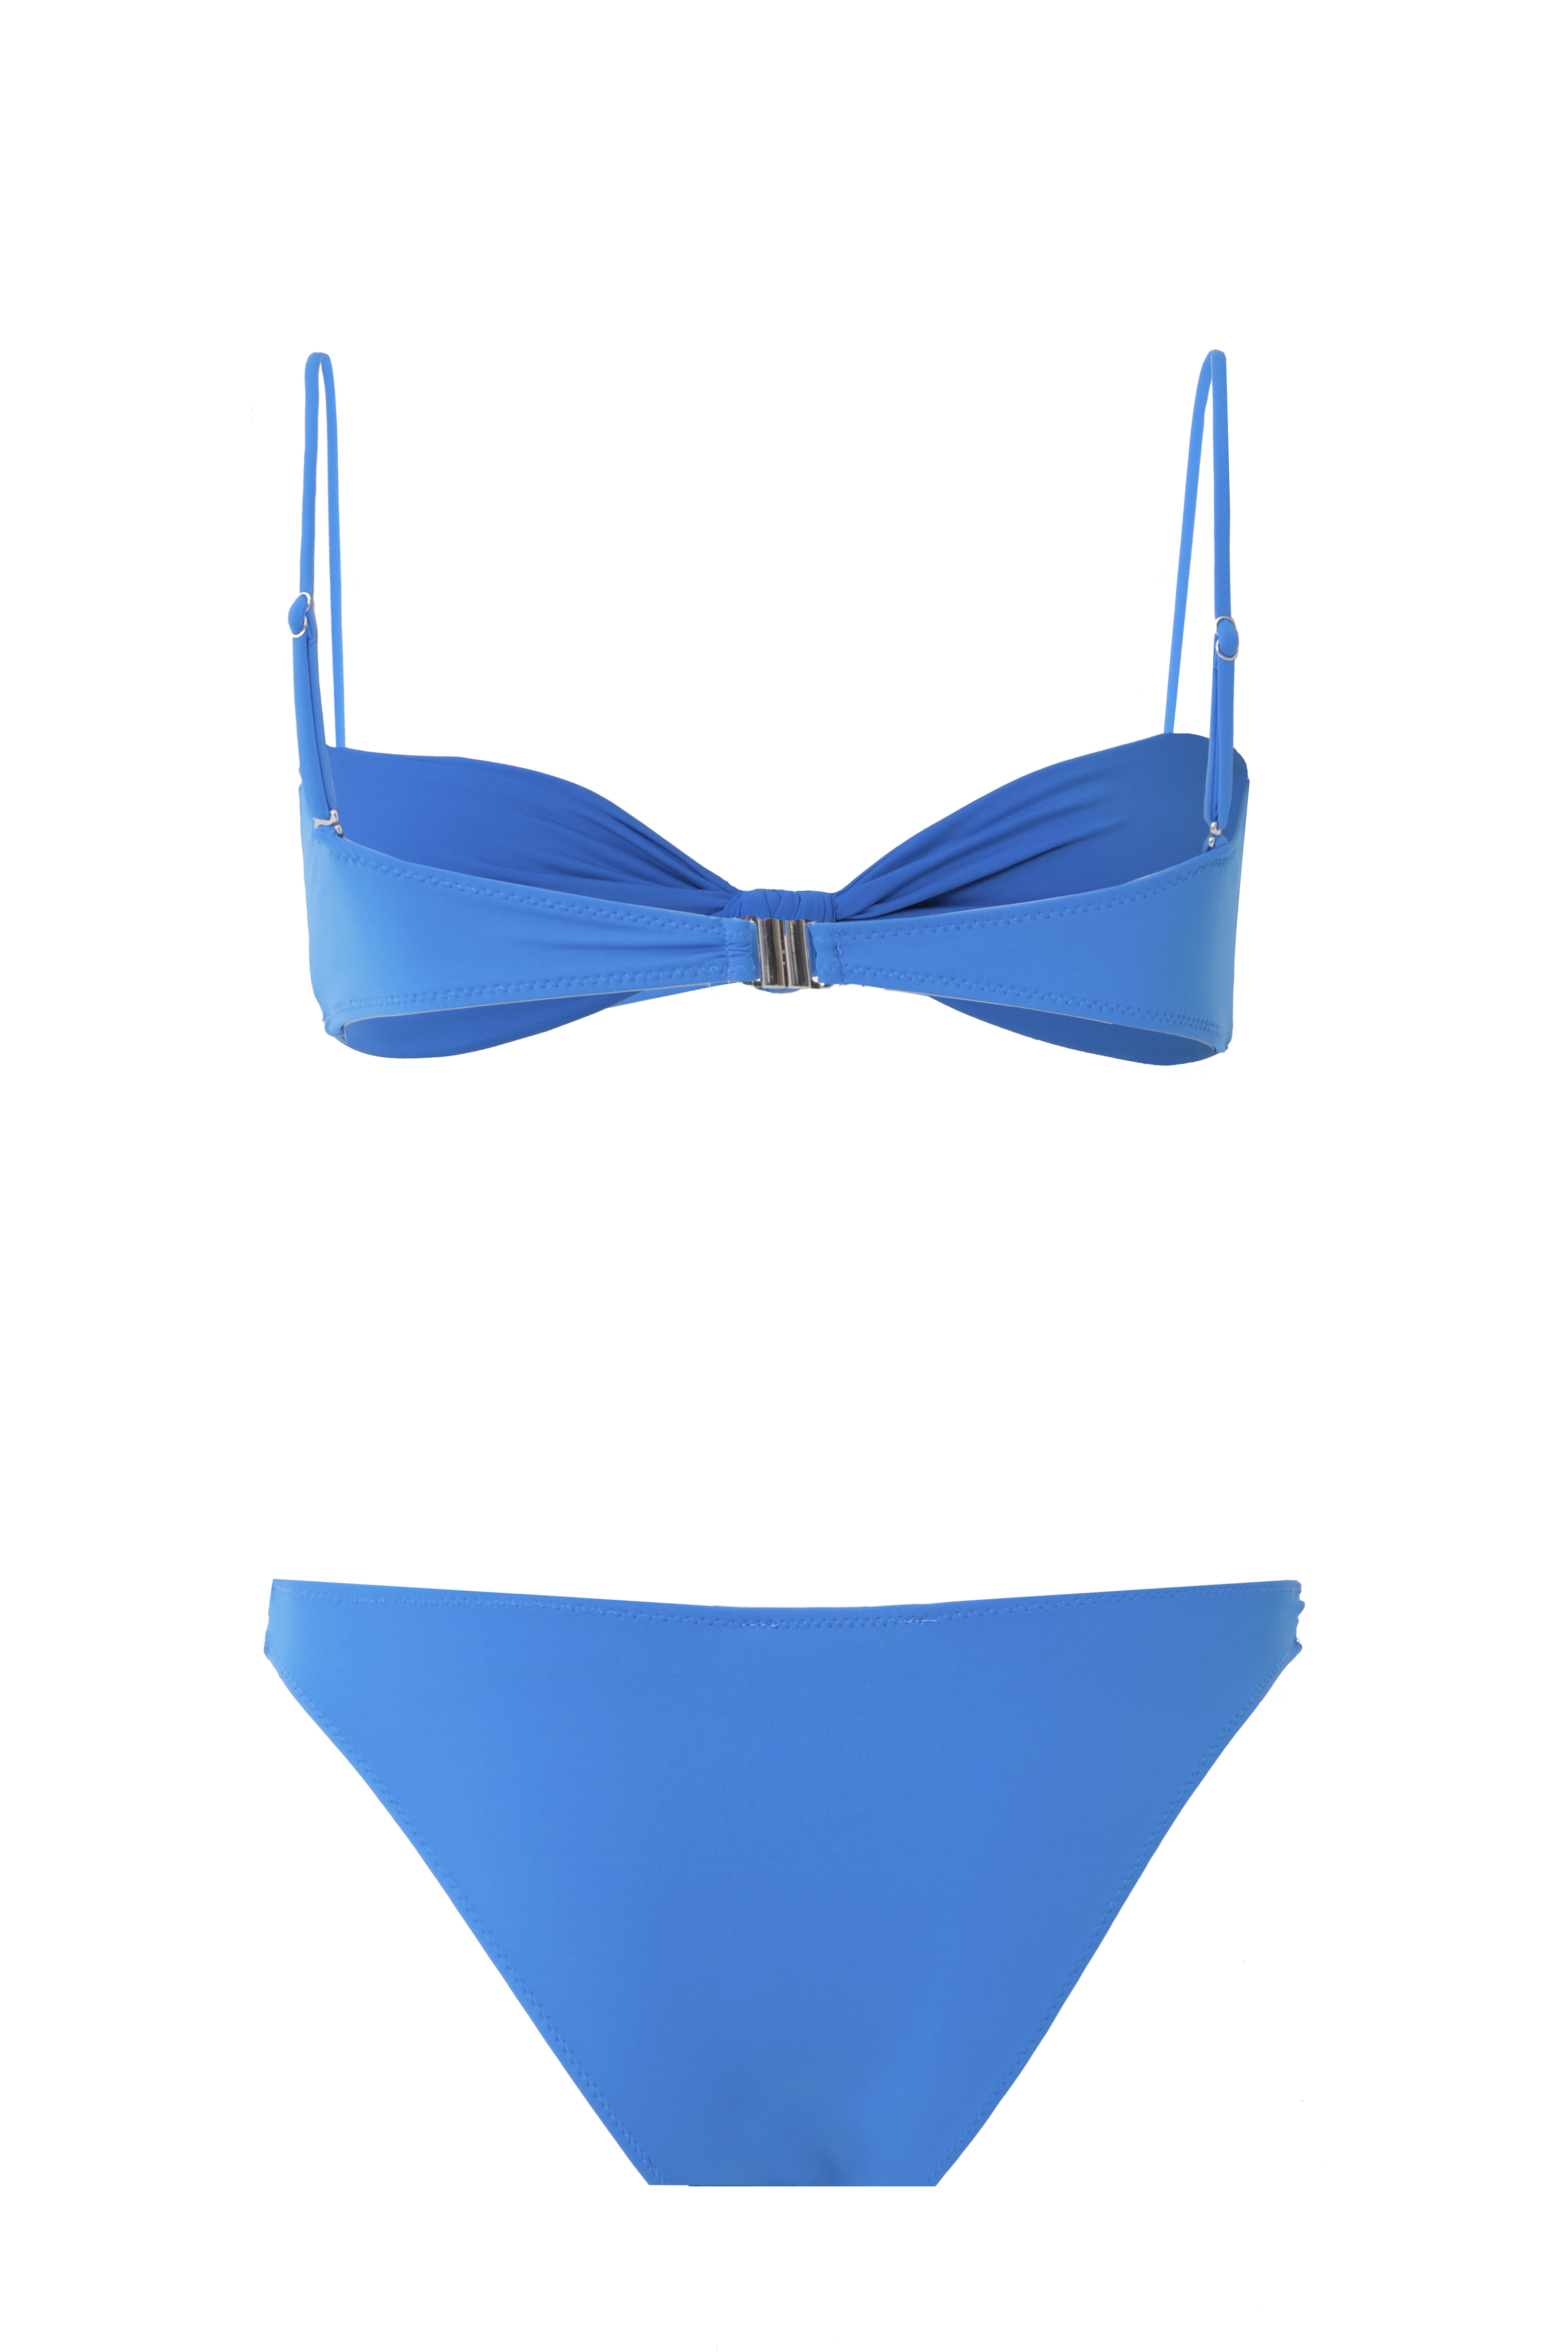 MIKKI Knot Detailed Blue Bikini Set